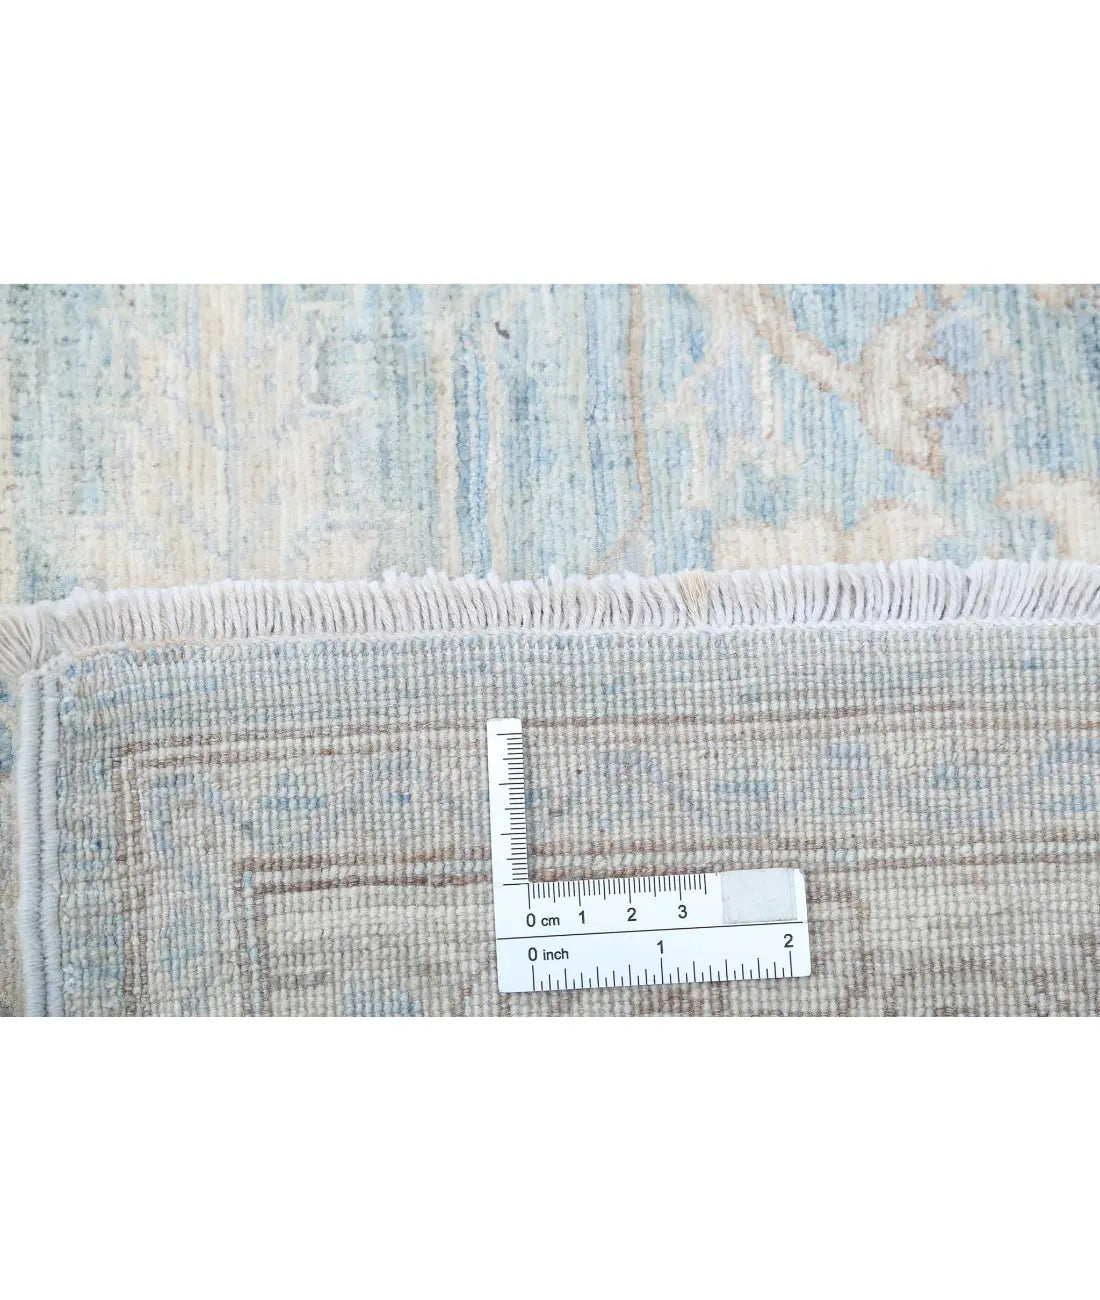 Hand Knotted Ariana Haji Jalili Wool Rug - 3'10'' x 16'8'' - Arteverk Rugs Area rug